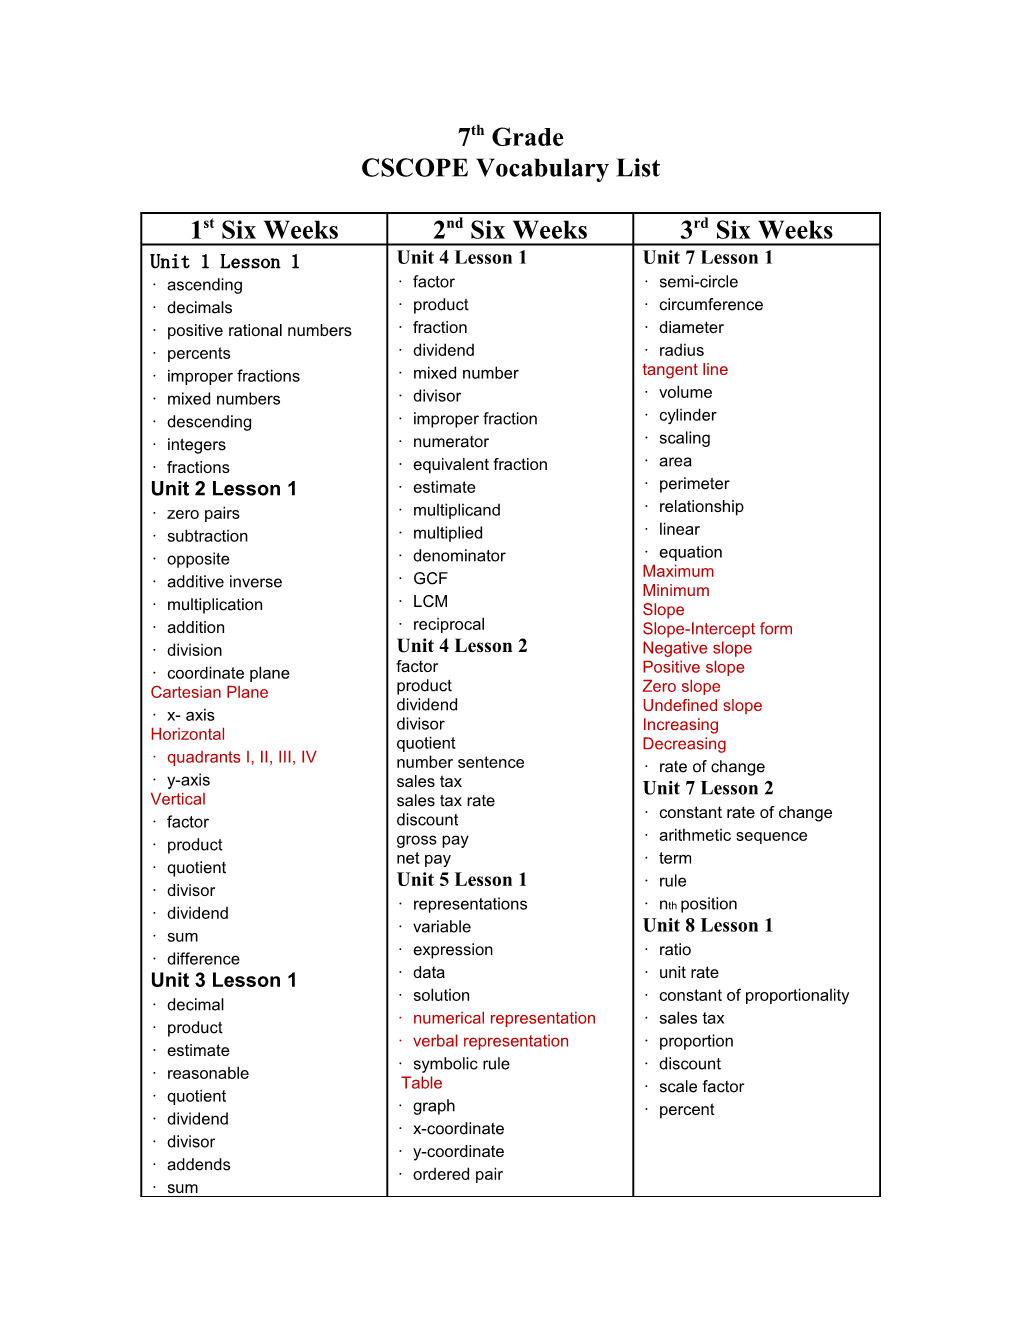 CSCOPE Vocabulary List